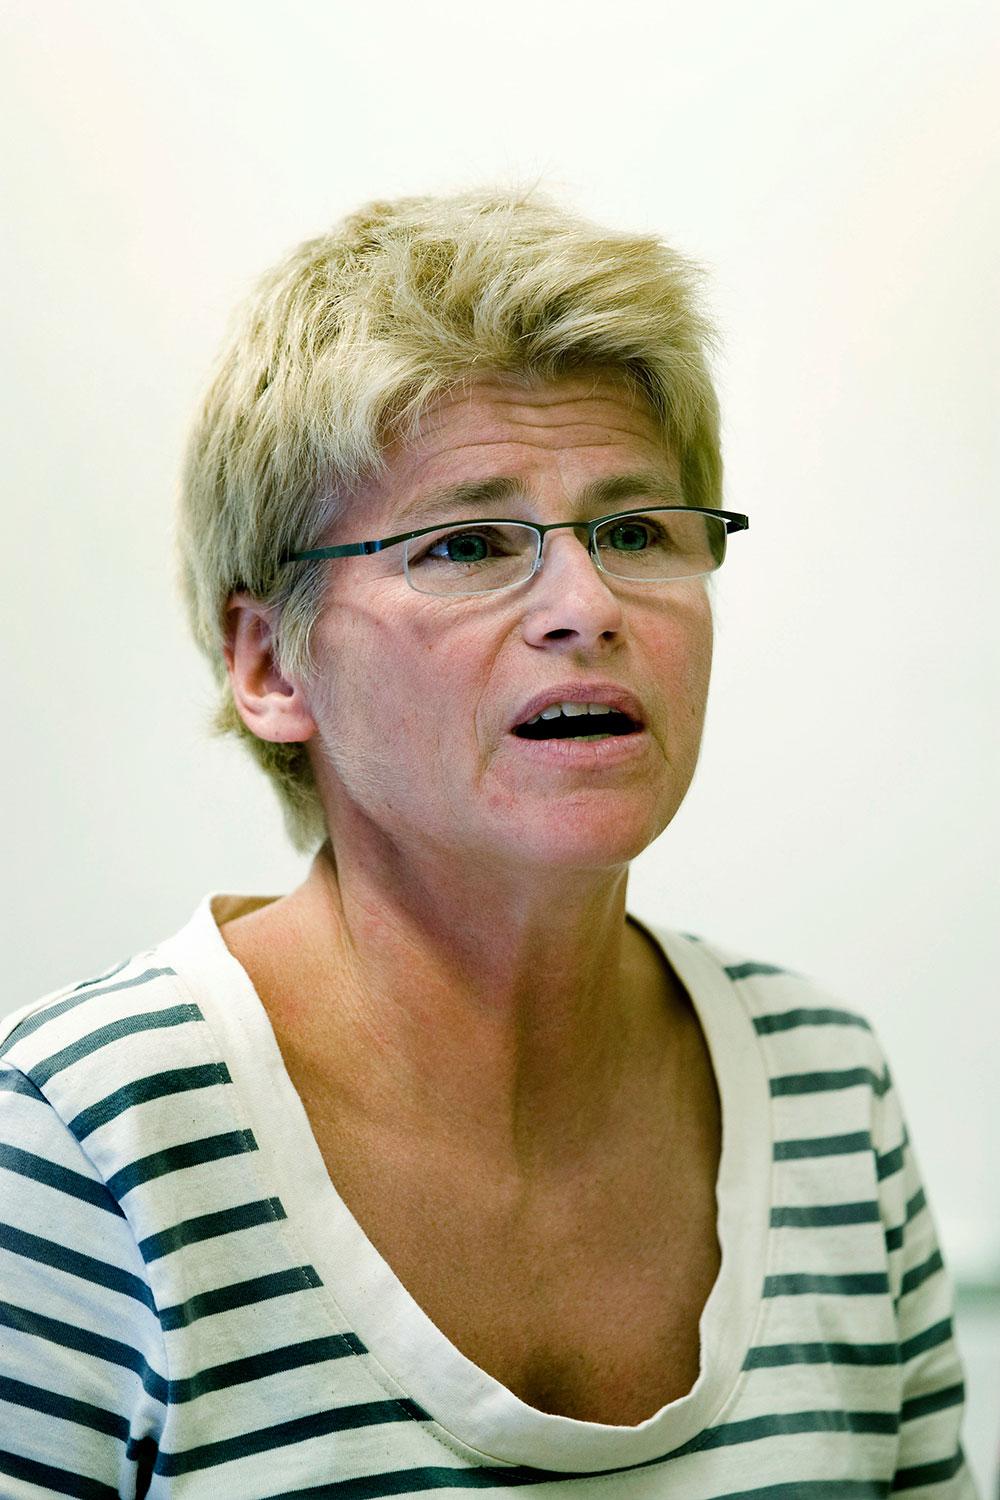 Karin Svensson Smith (MP).